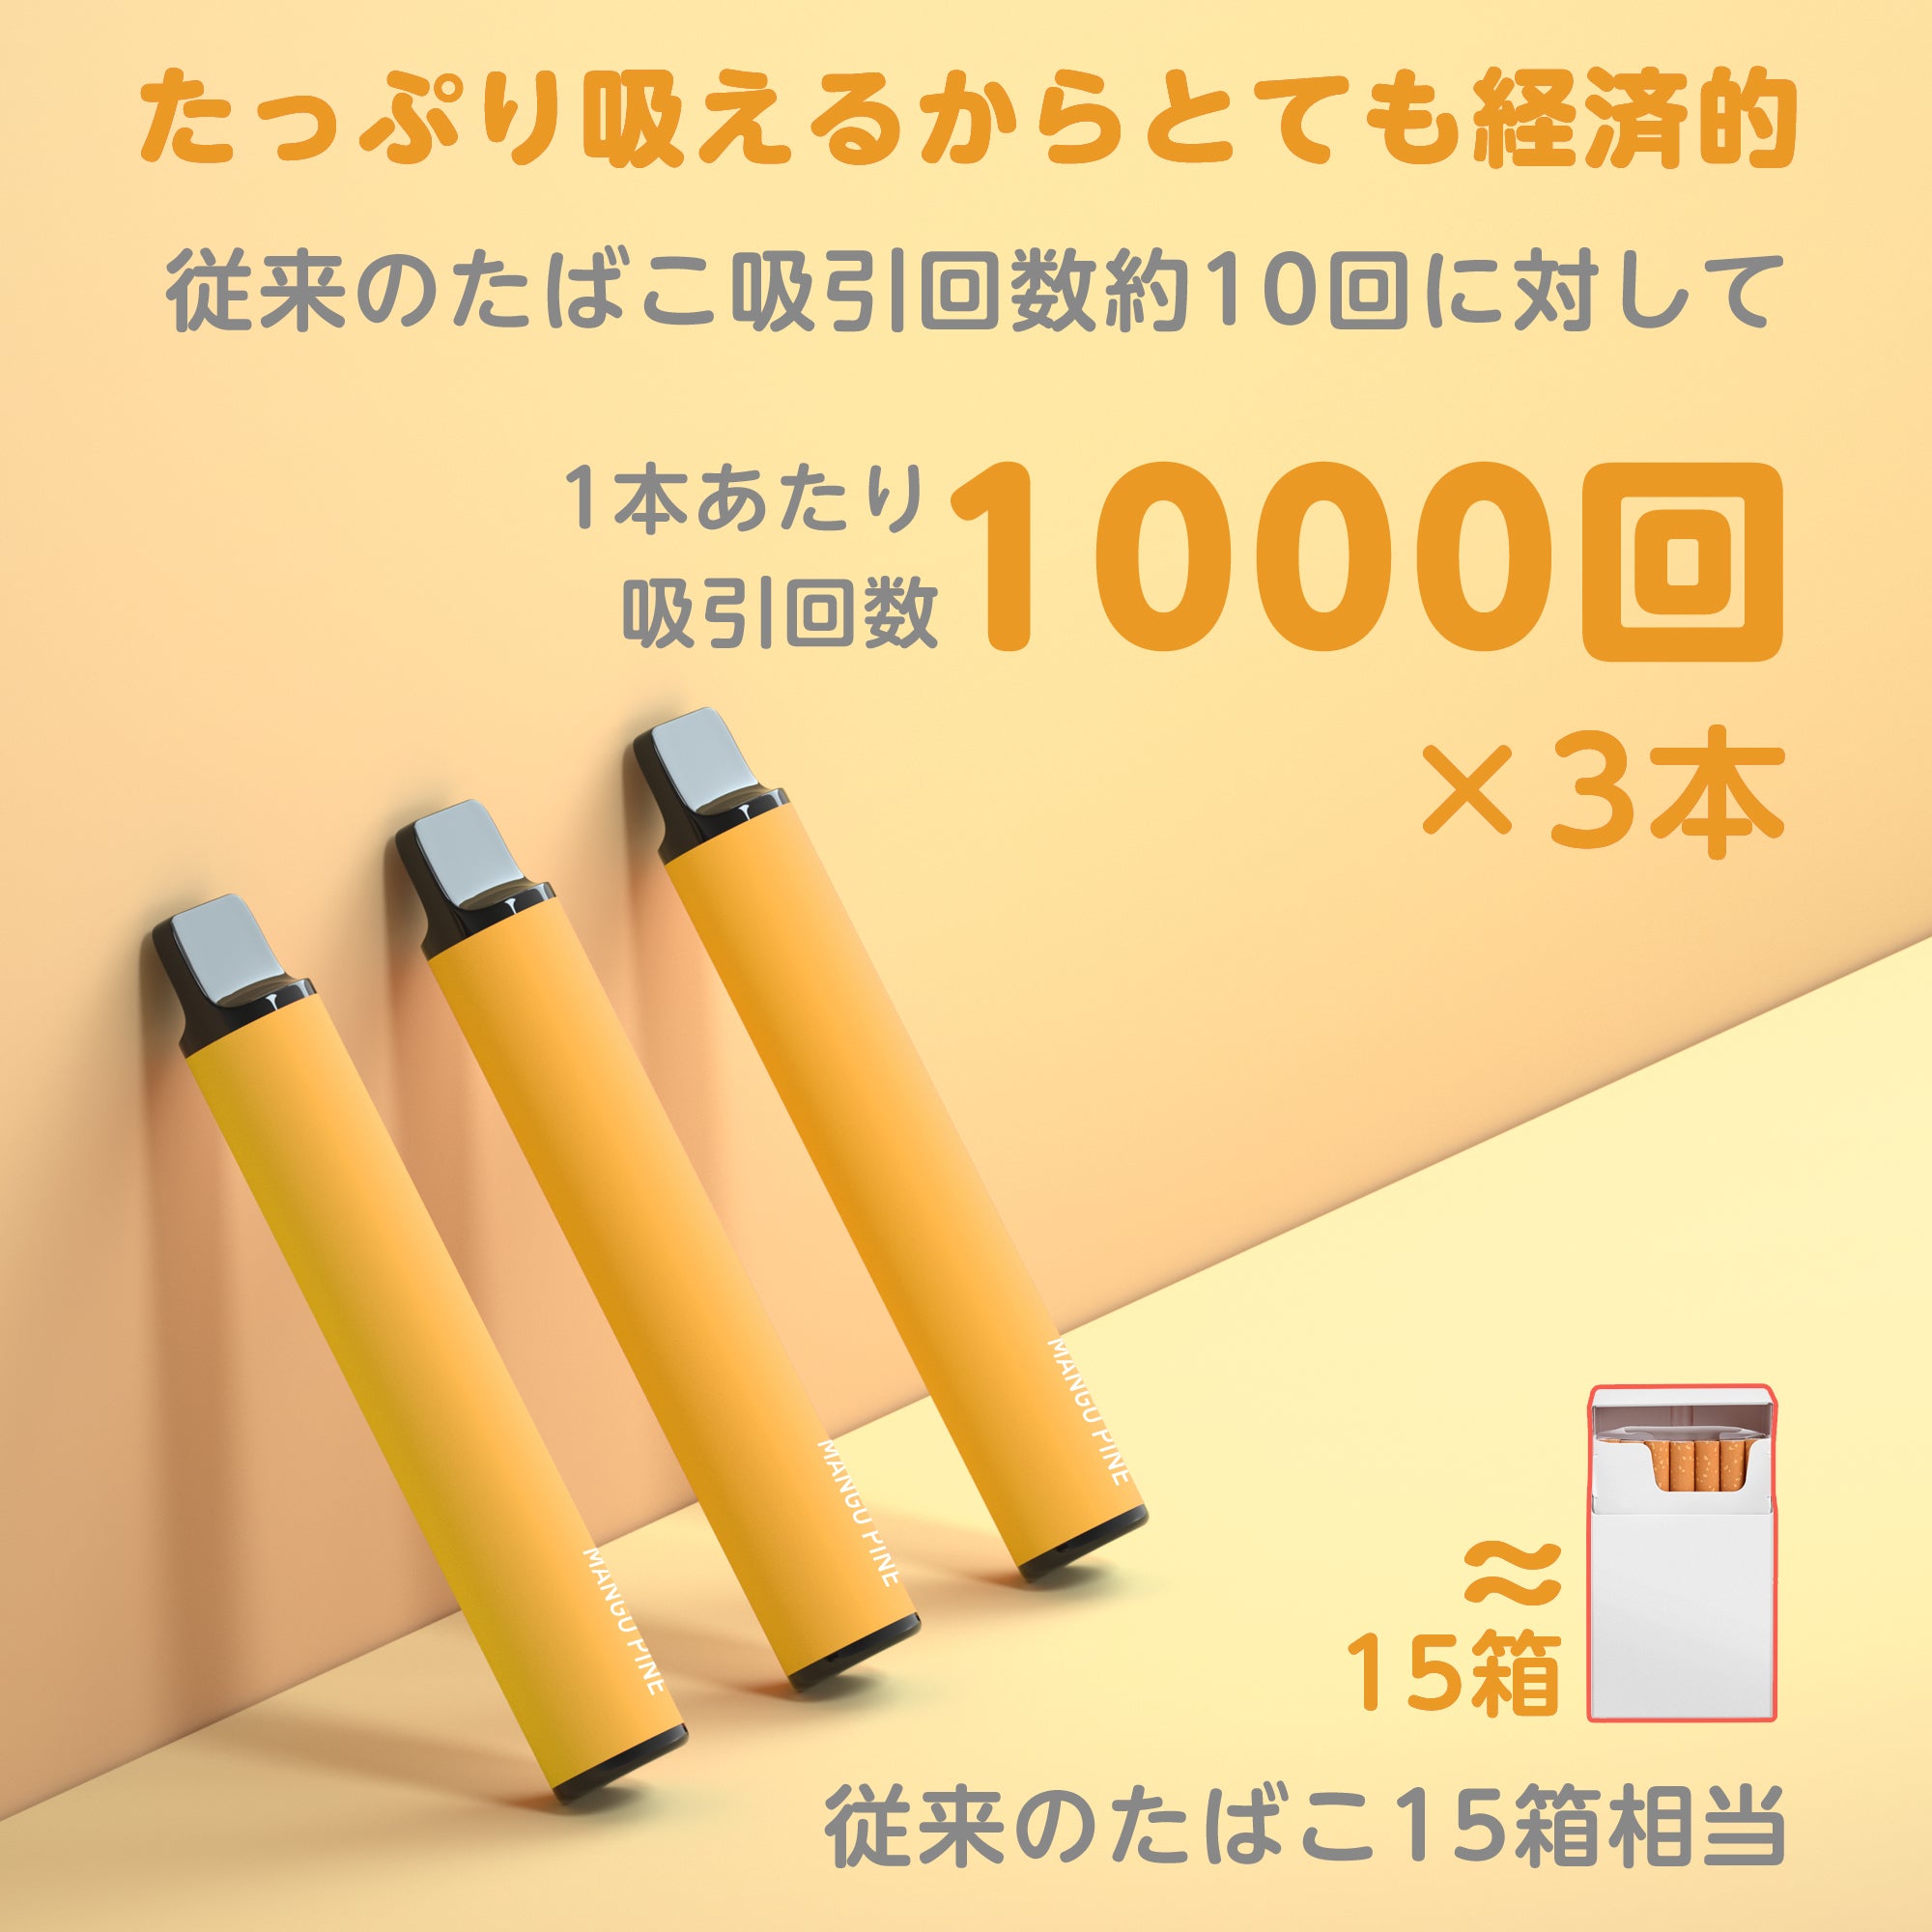 KINOE Disposable Electronic Cigarette Set of 3 (Mango Pine Apple)